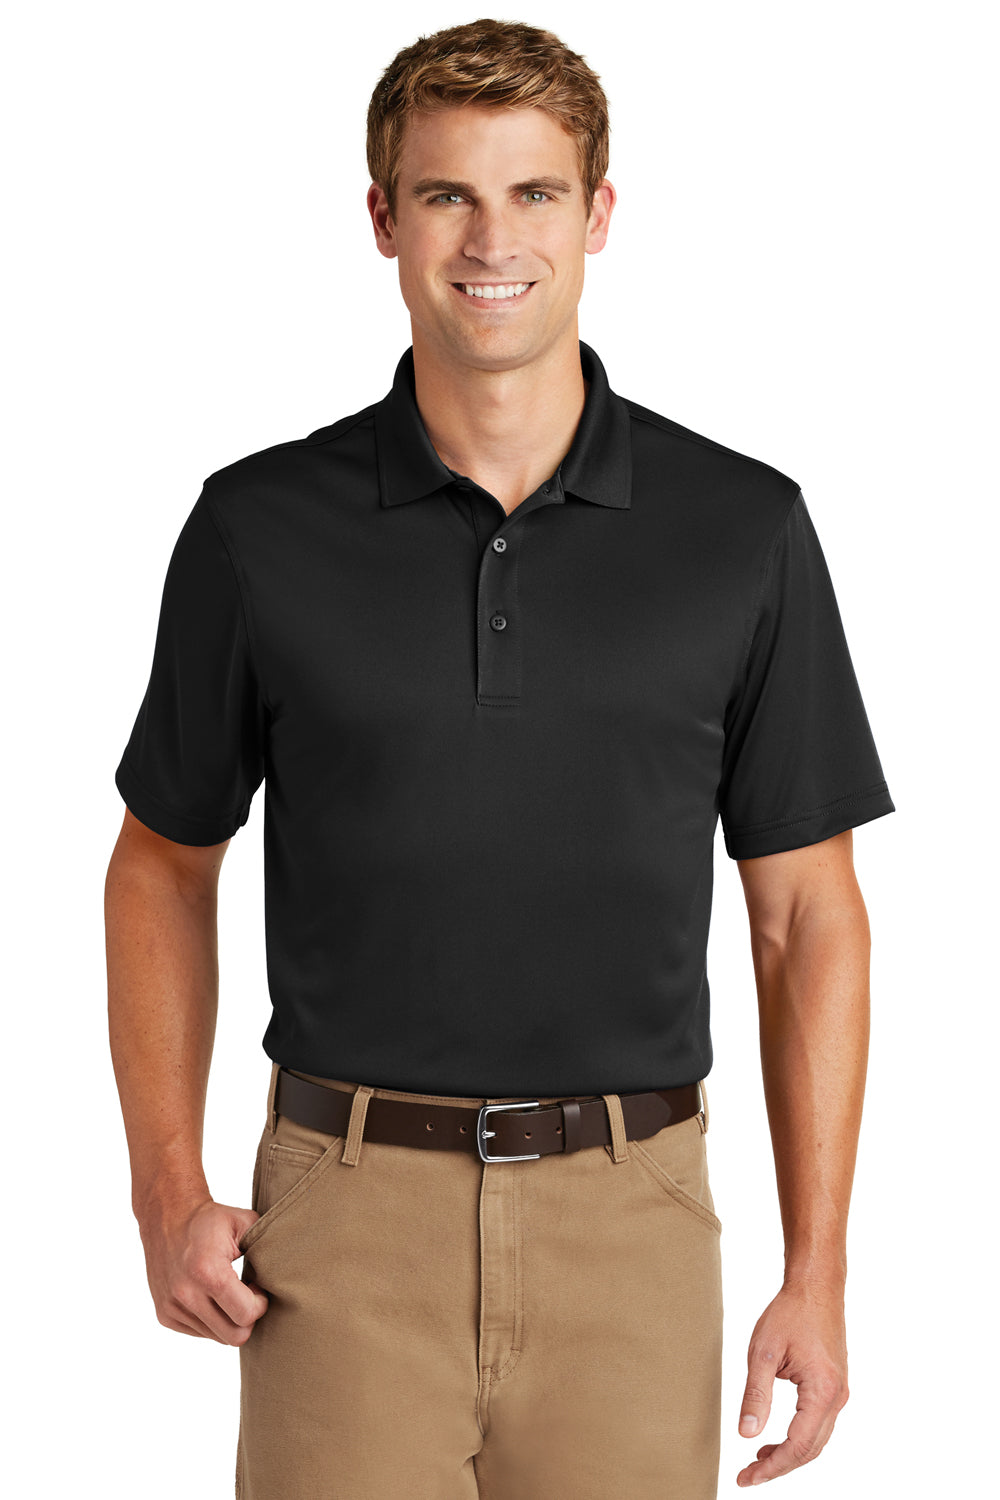 CornerStone CS412 Mens Select Moisture Wicking Short Sleeve Polo Shirt Black Front